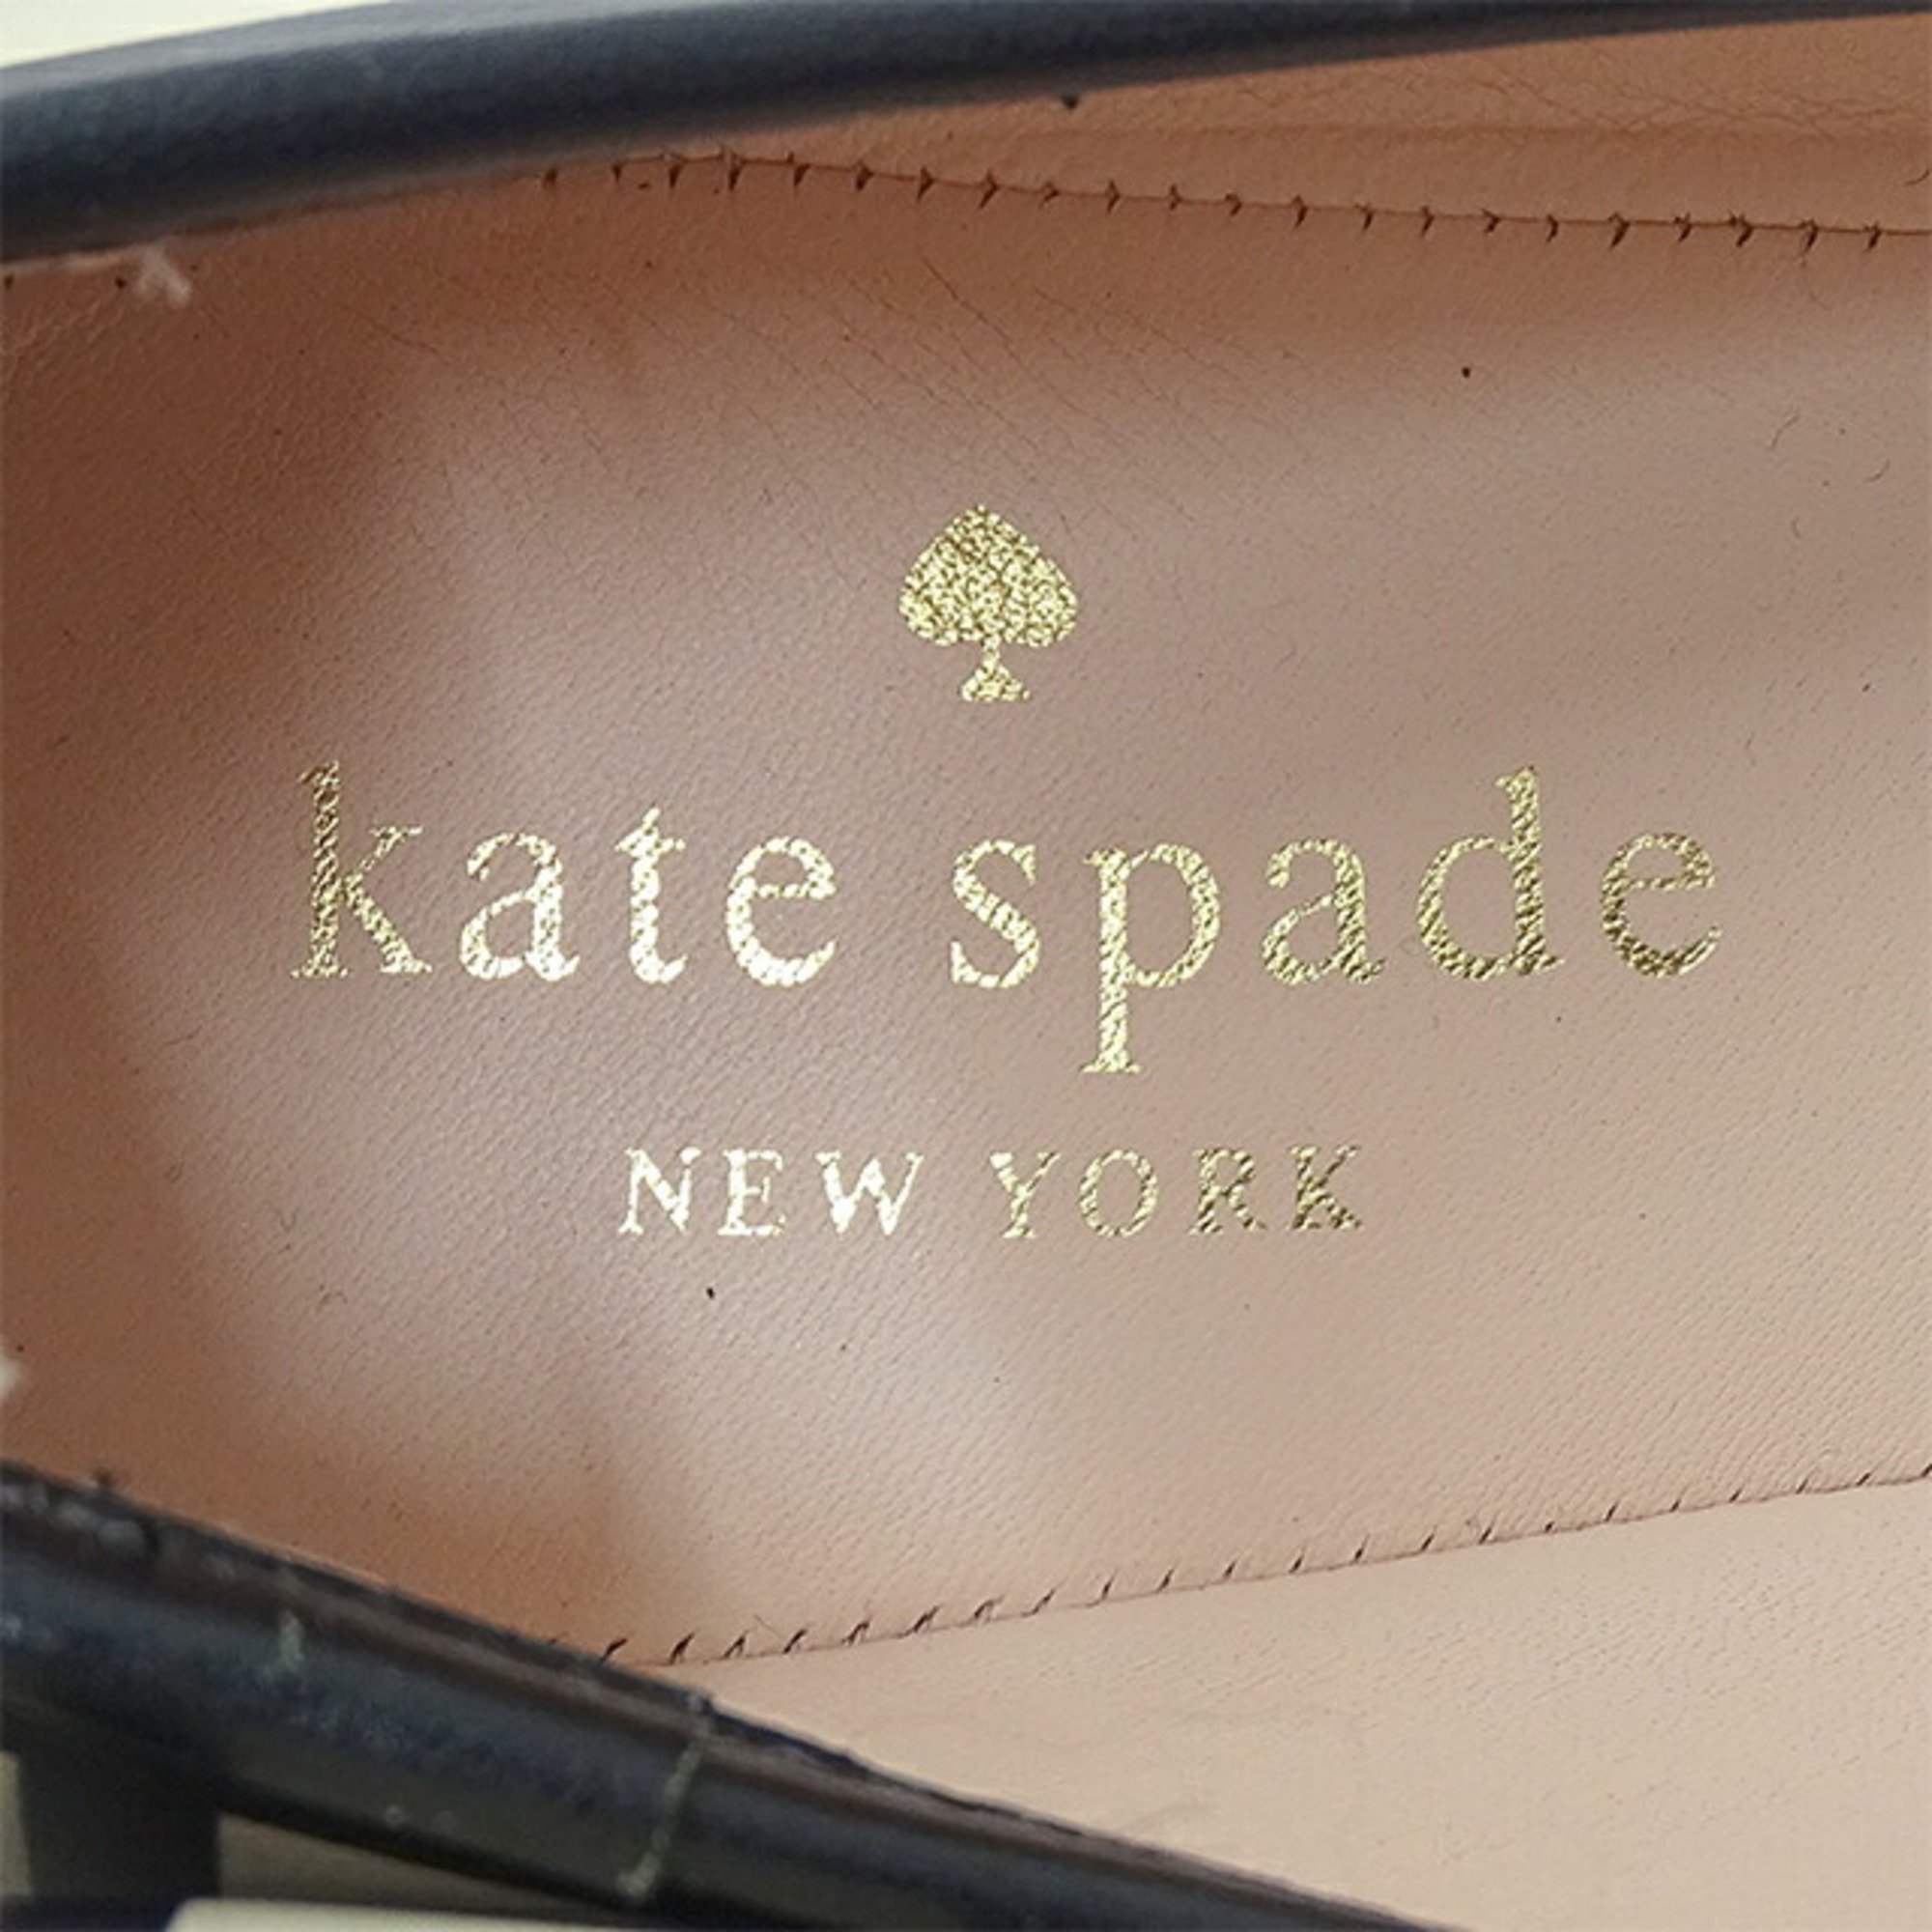 Kate Spade New York Pumps Women's Brand Leather Ballet Shoes White Black Plaid Flat